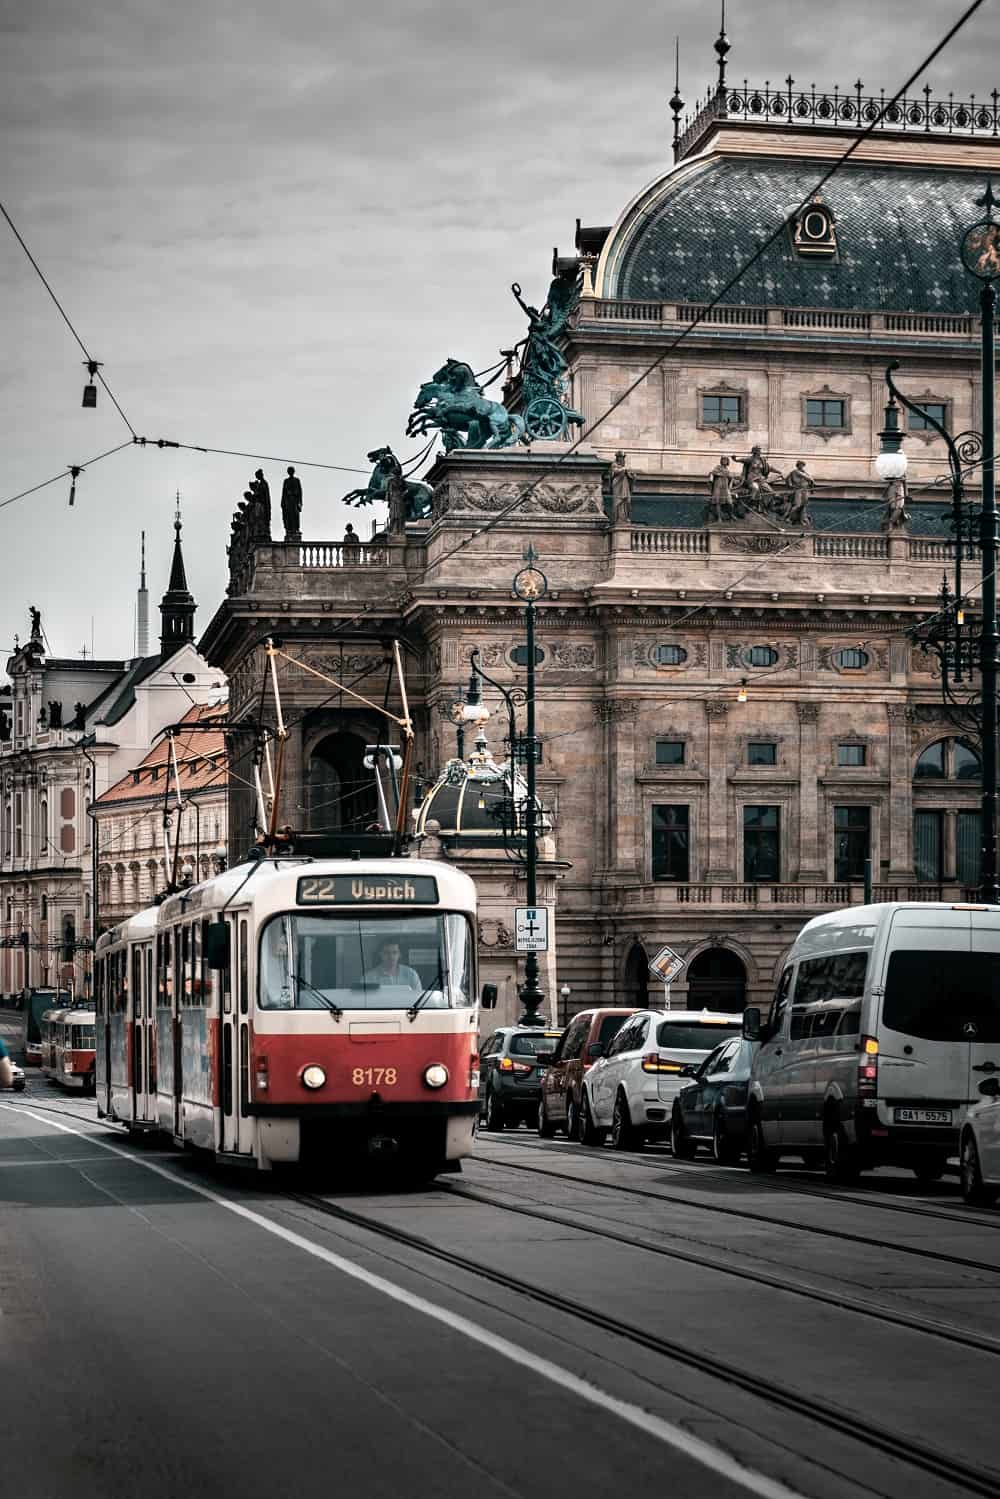 Prague public transits